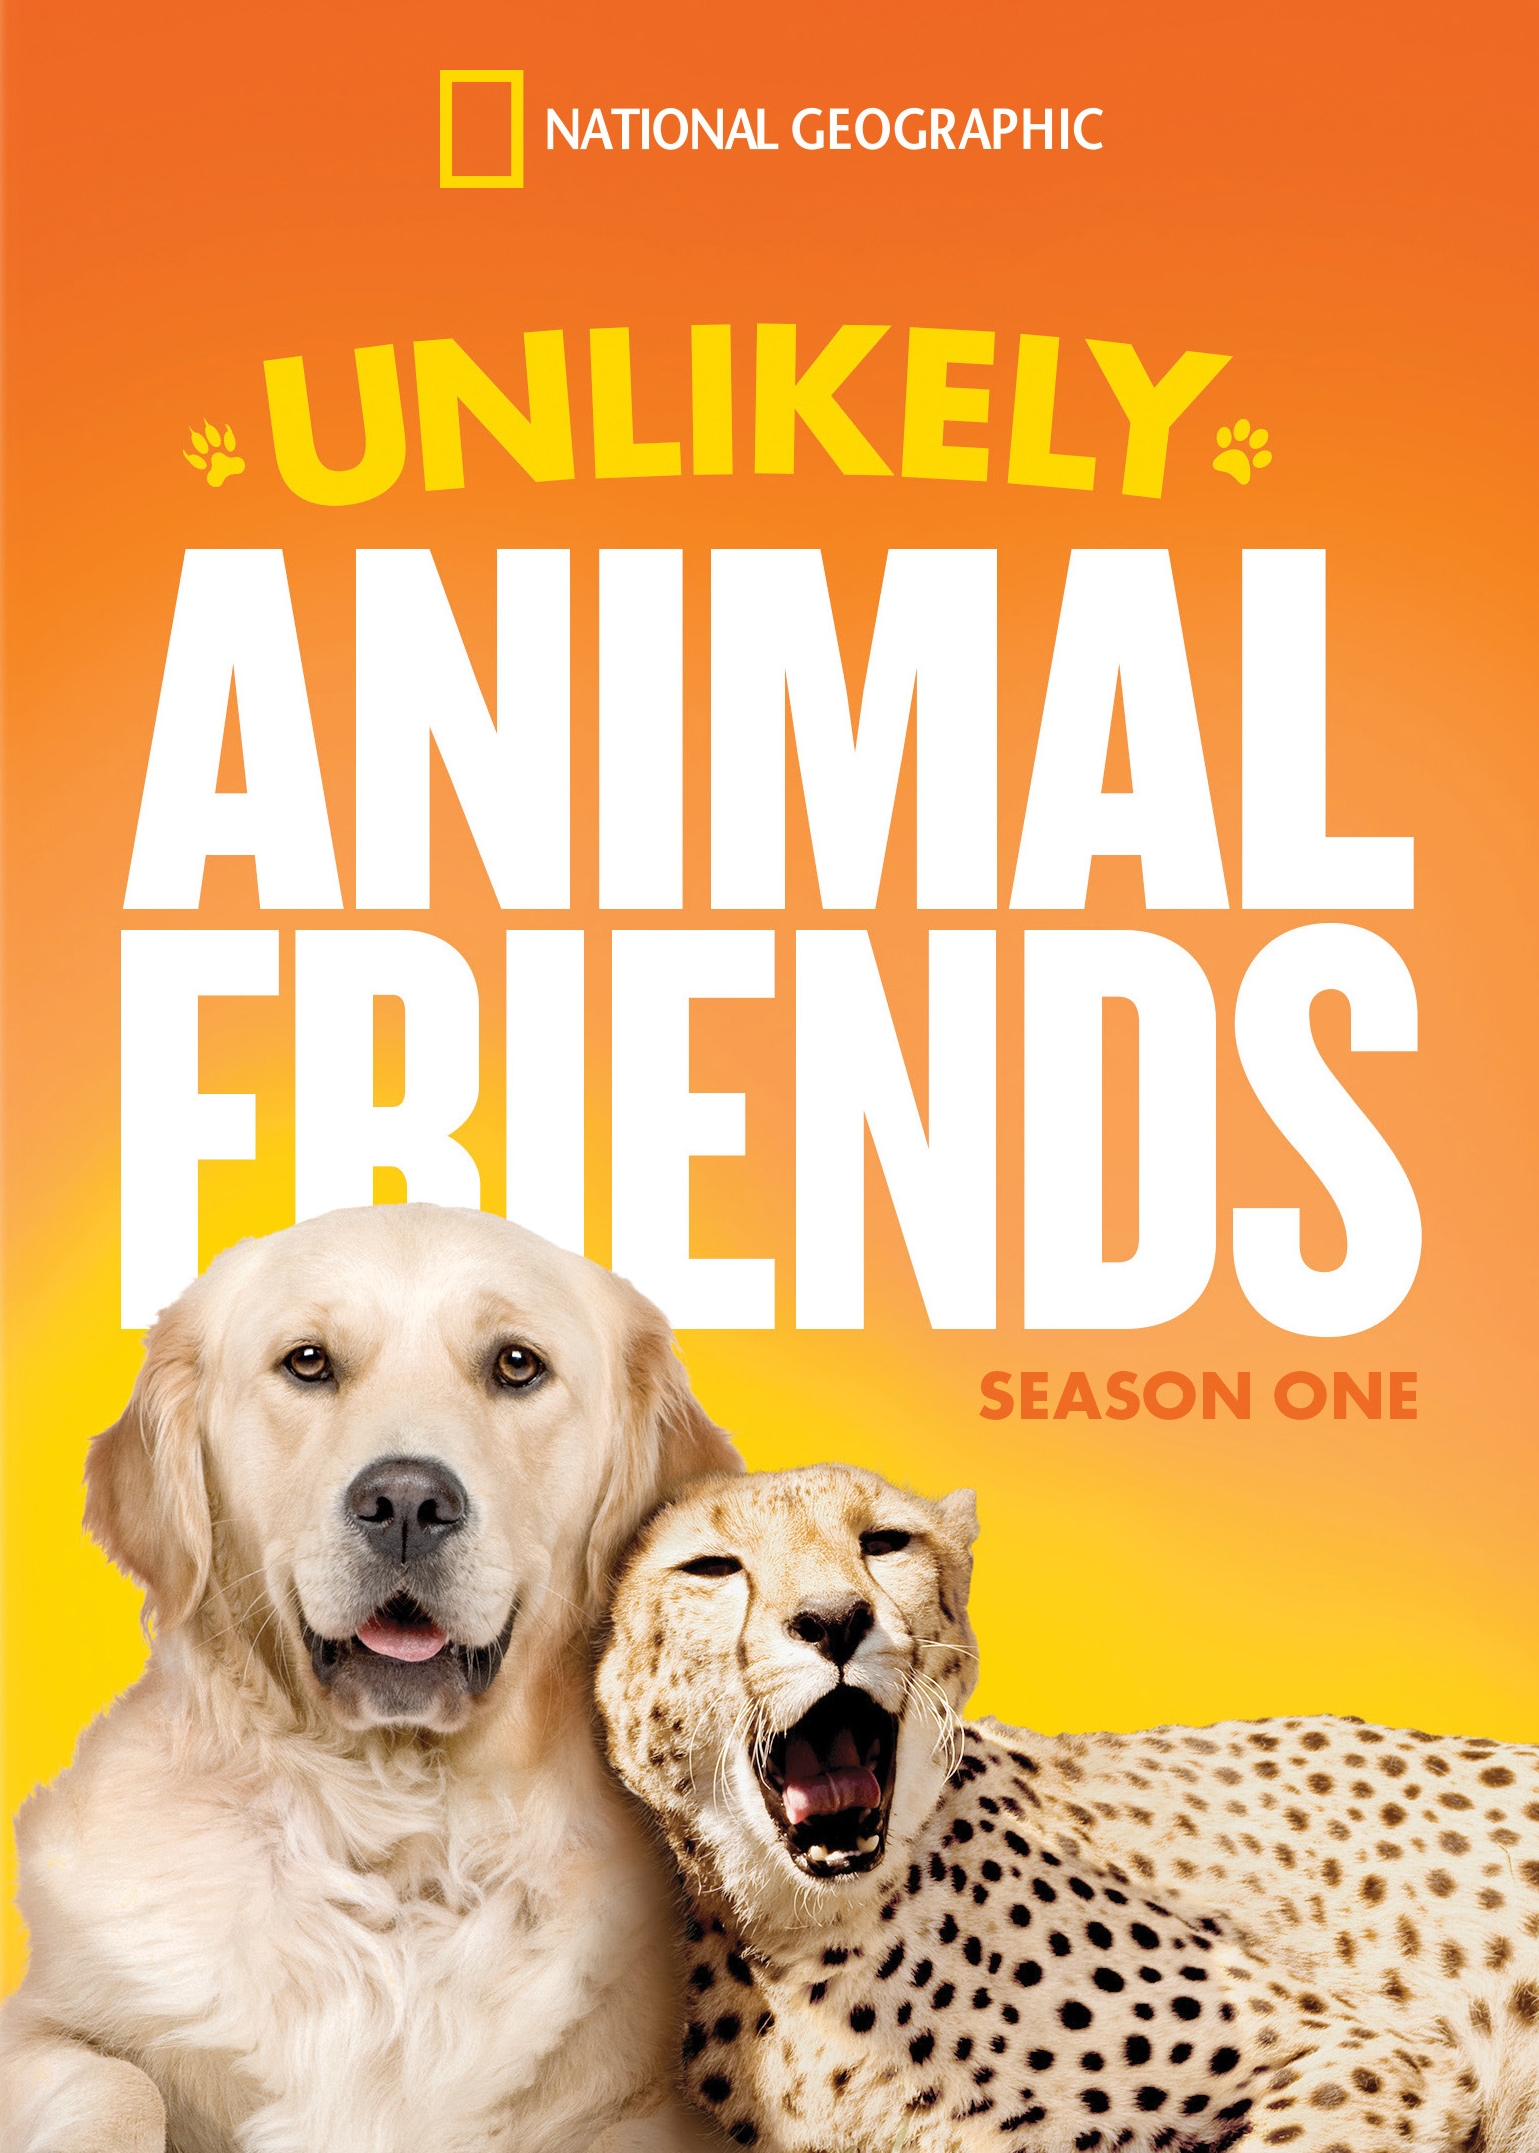 uncommon animal friends